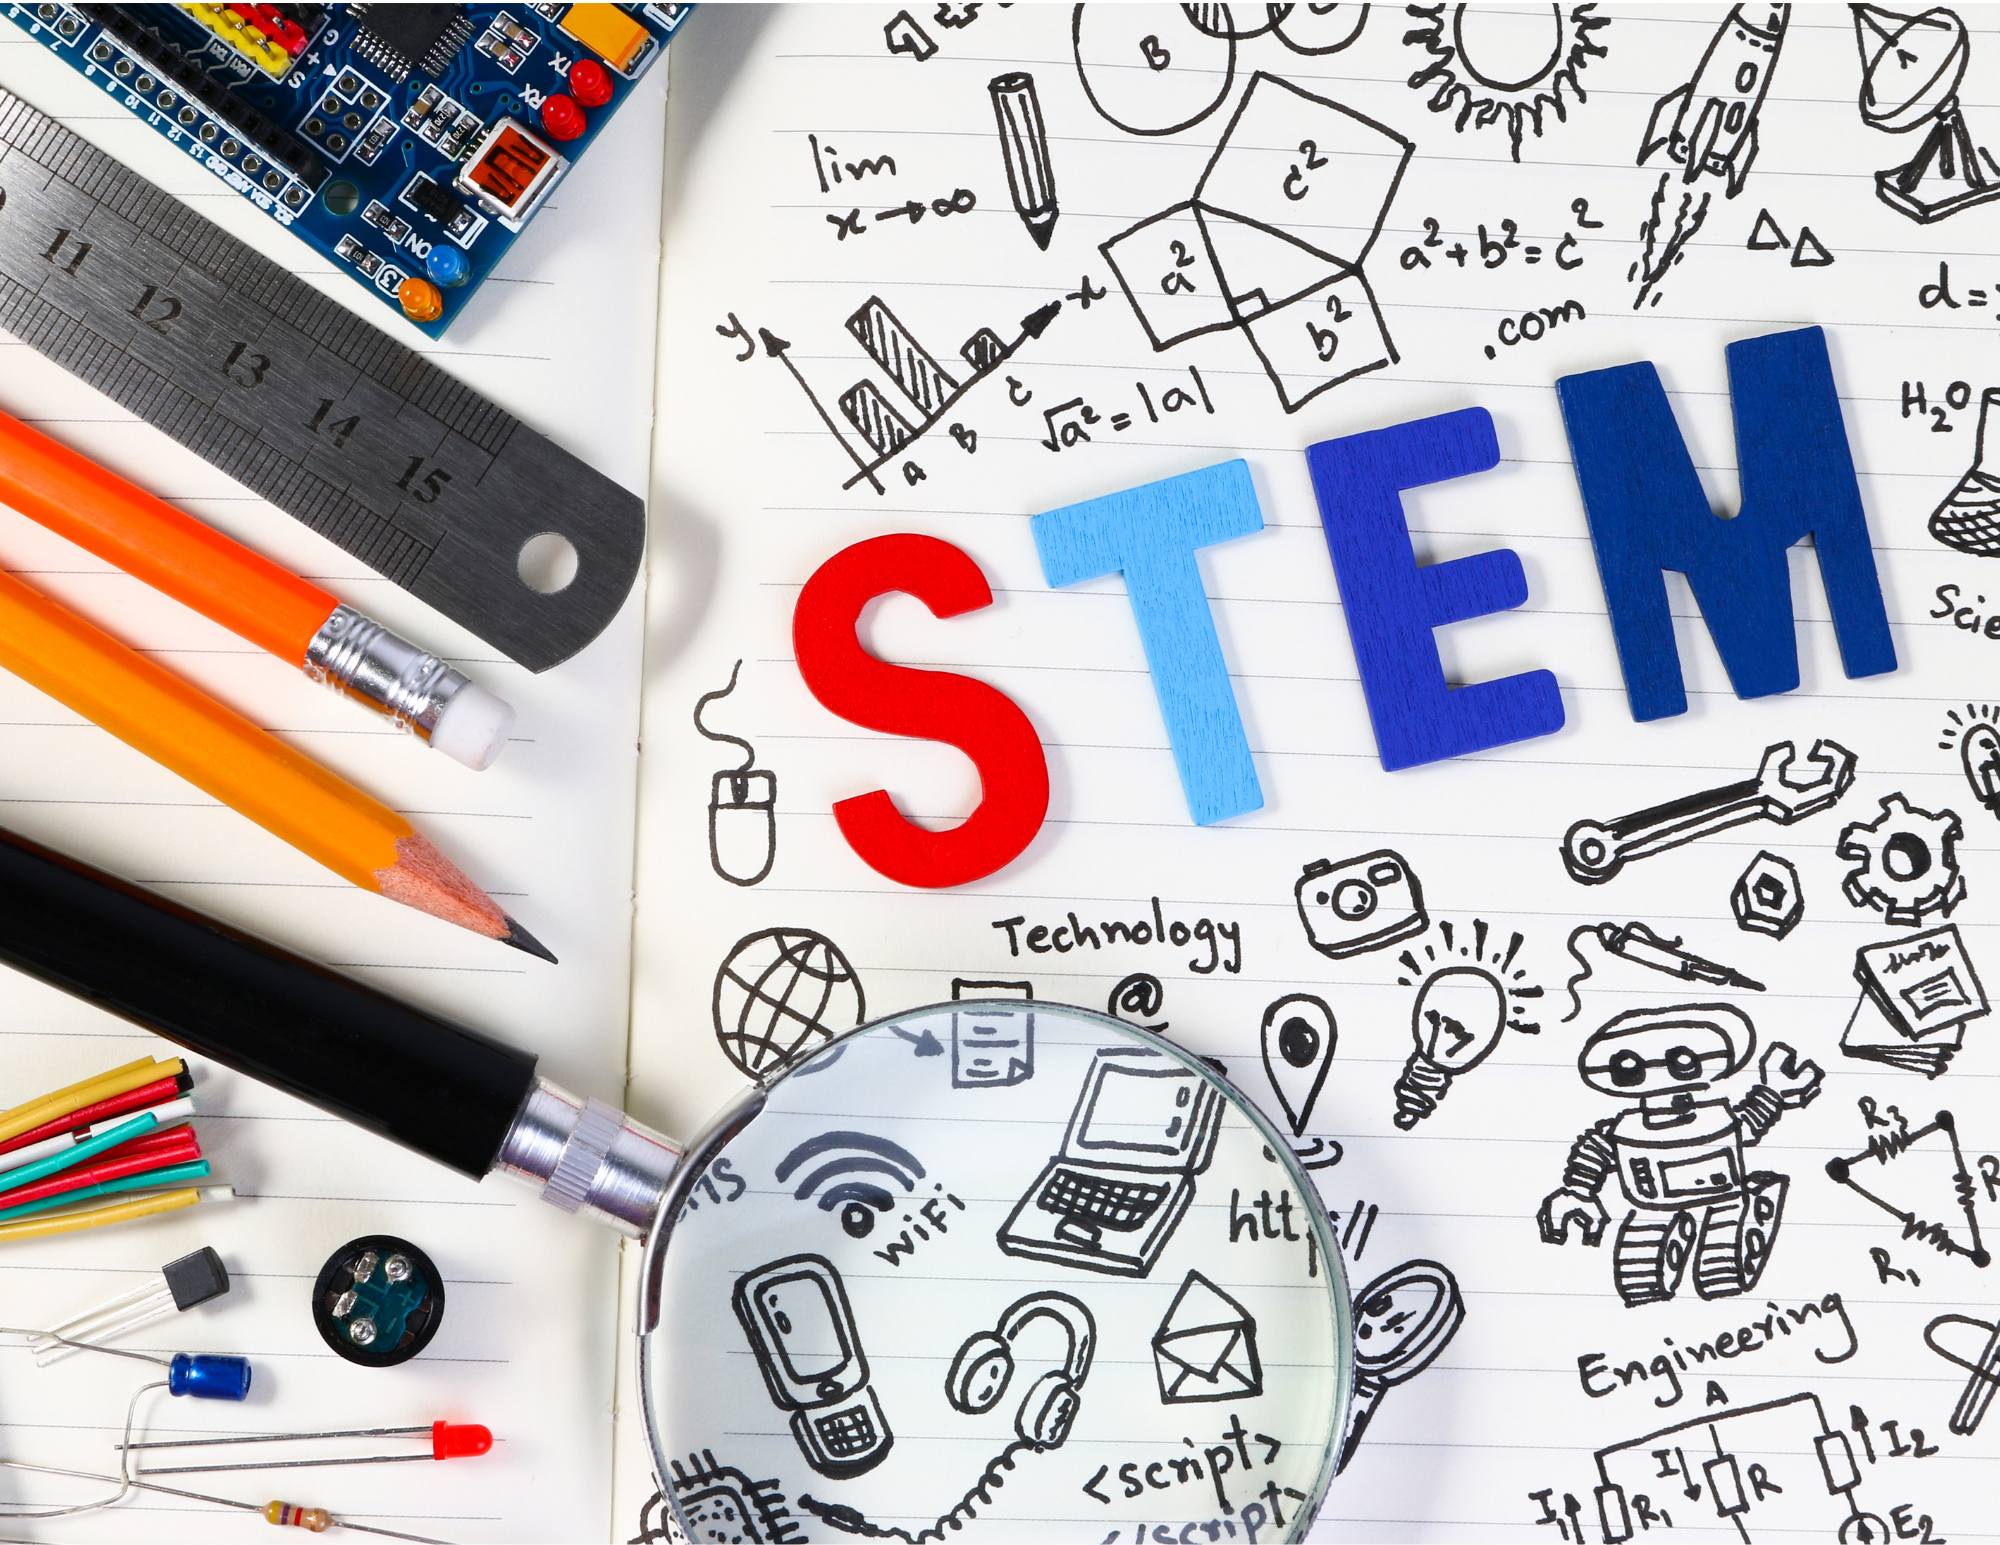 Pencils, ruler, pens lay beside a doodle reading "STEM"